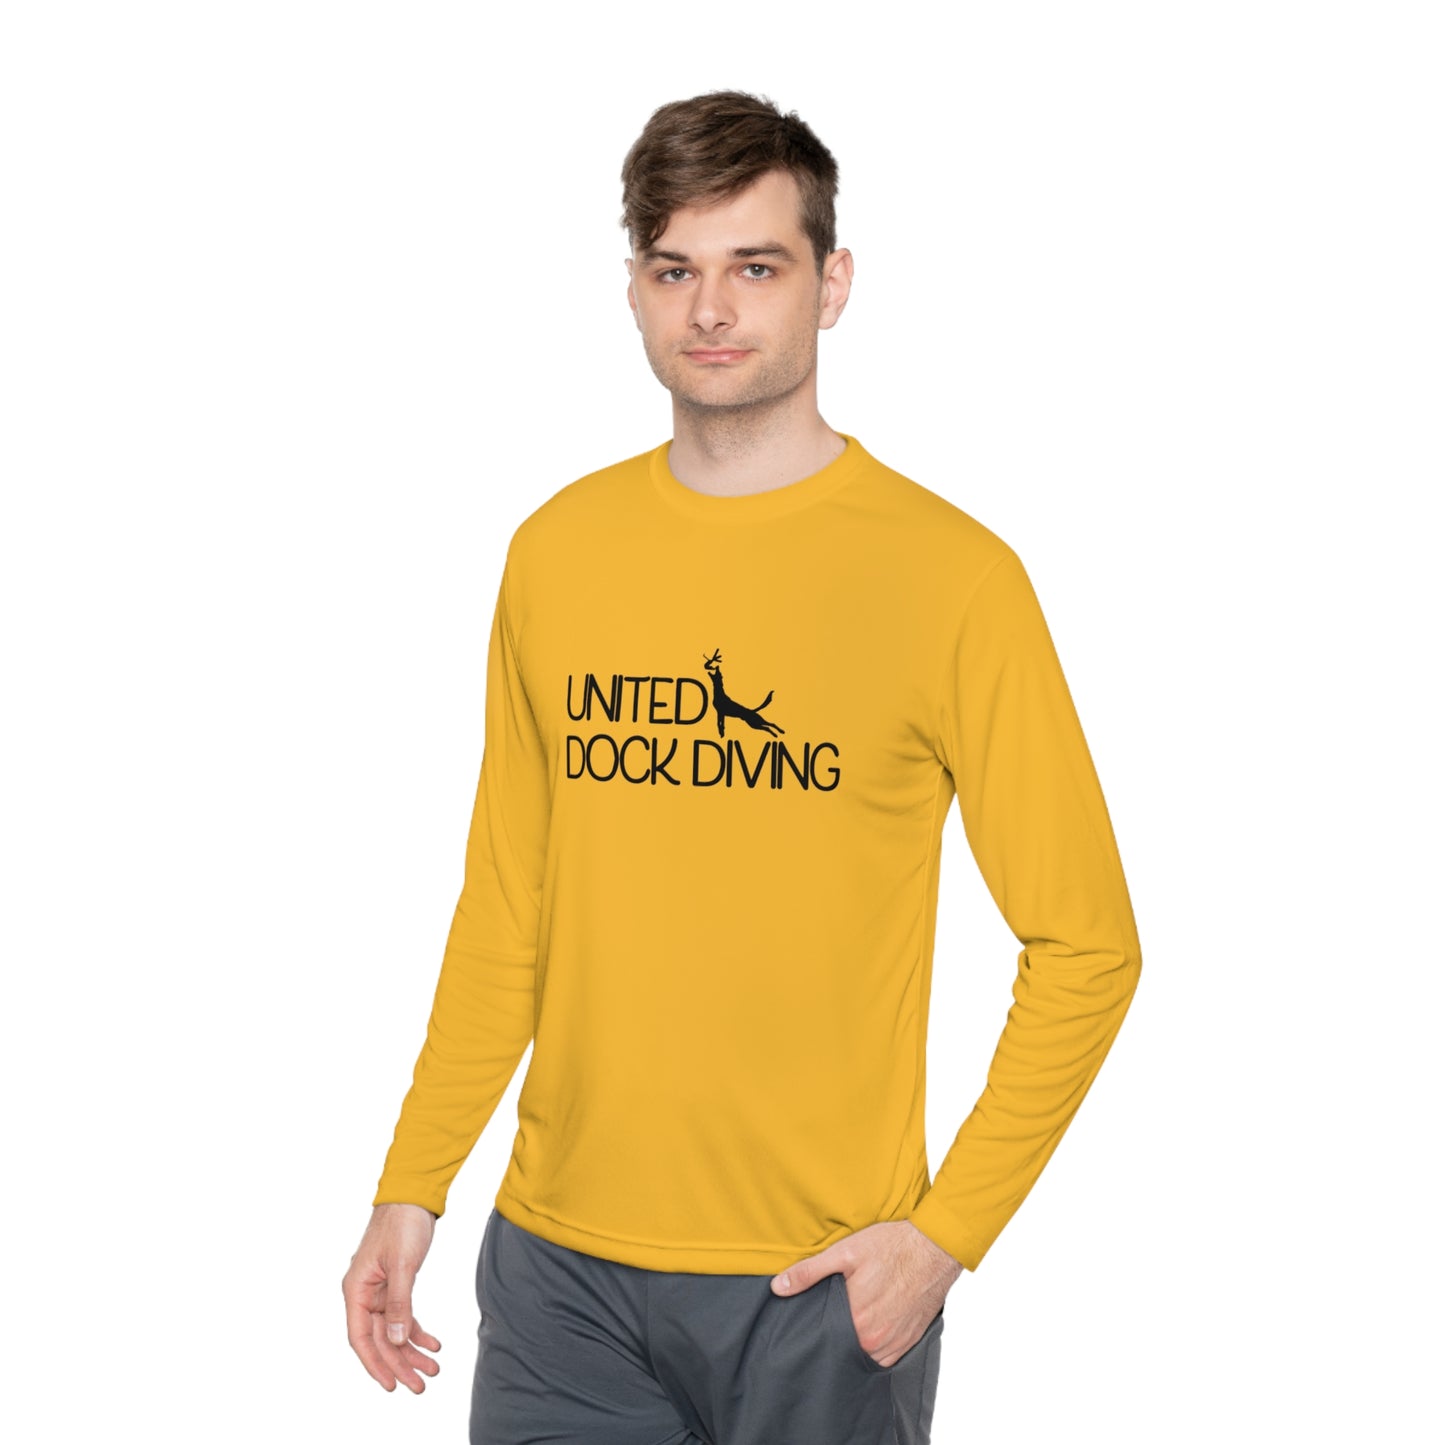 Customize Your UDD Long Sleeve Shirts